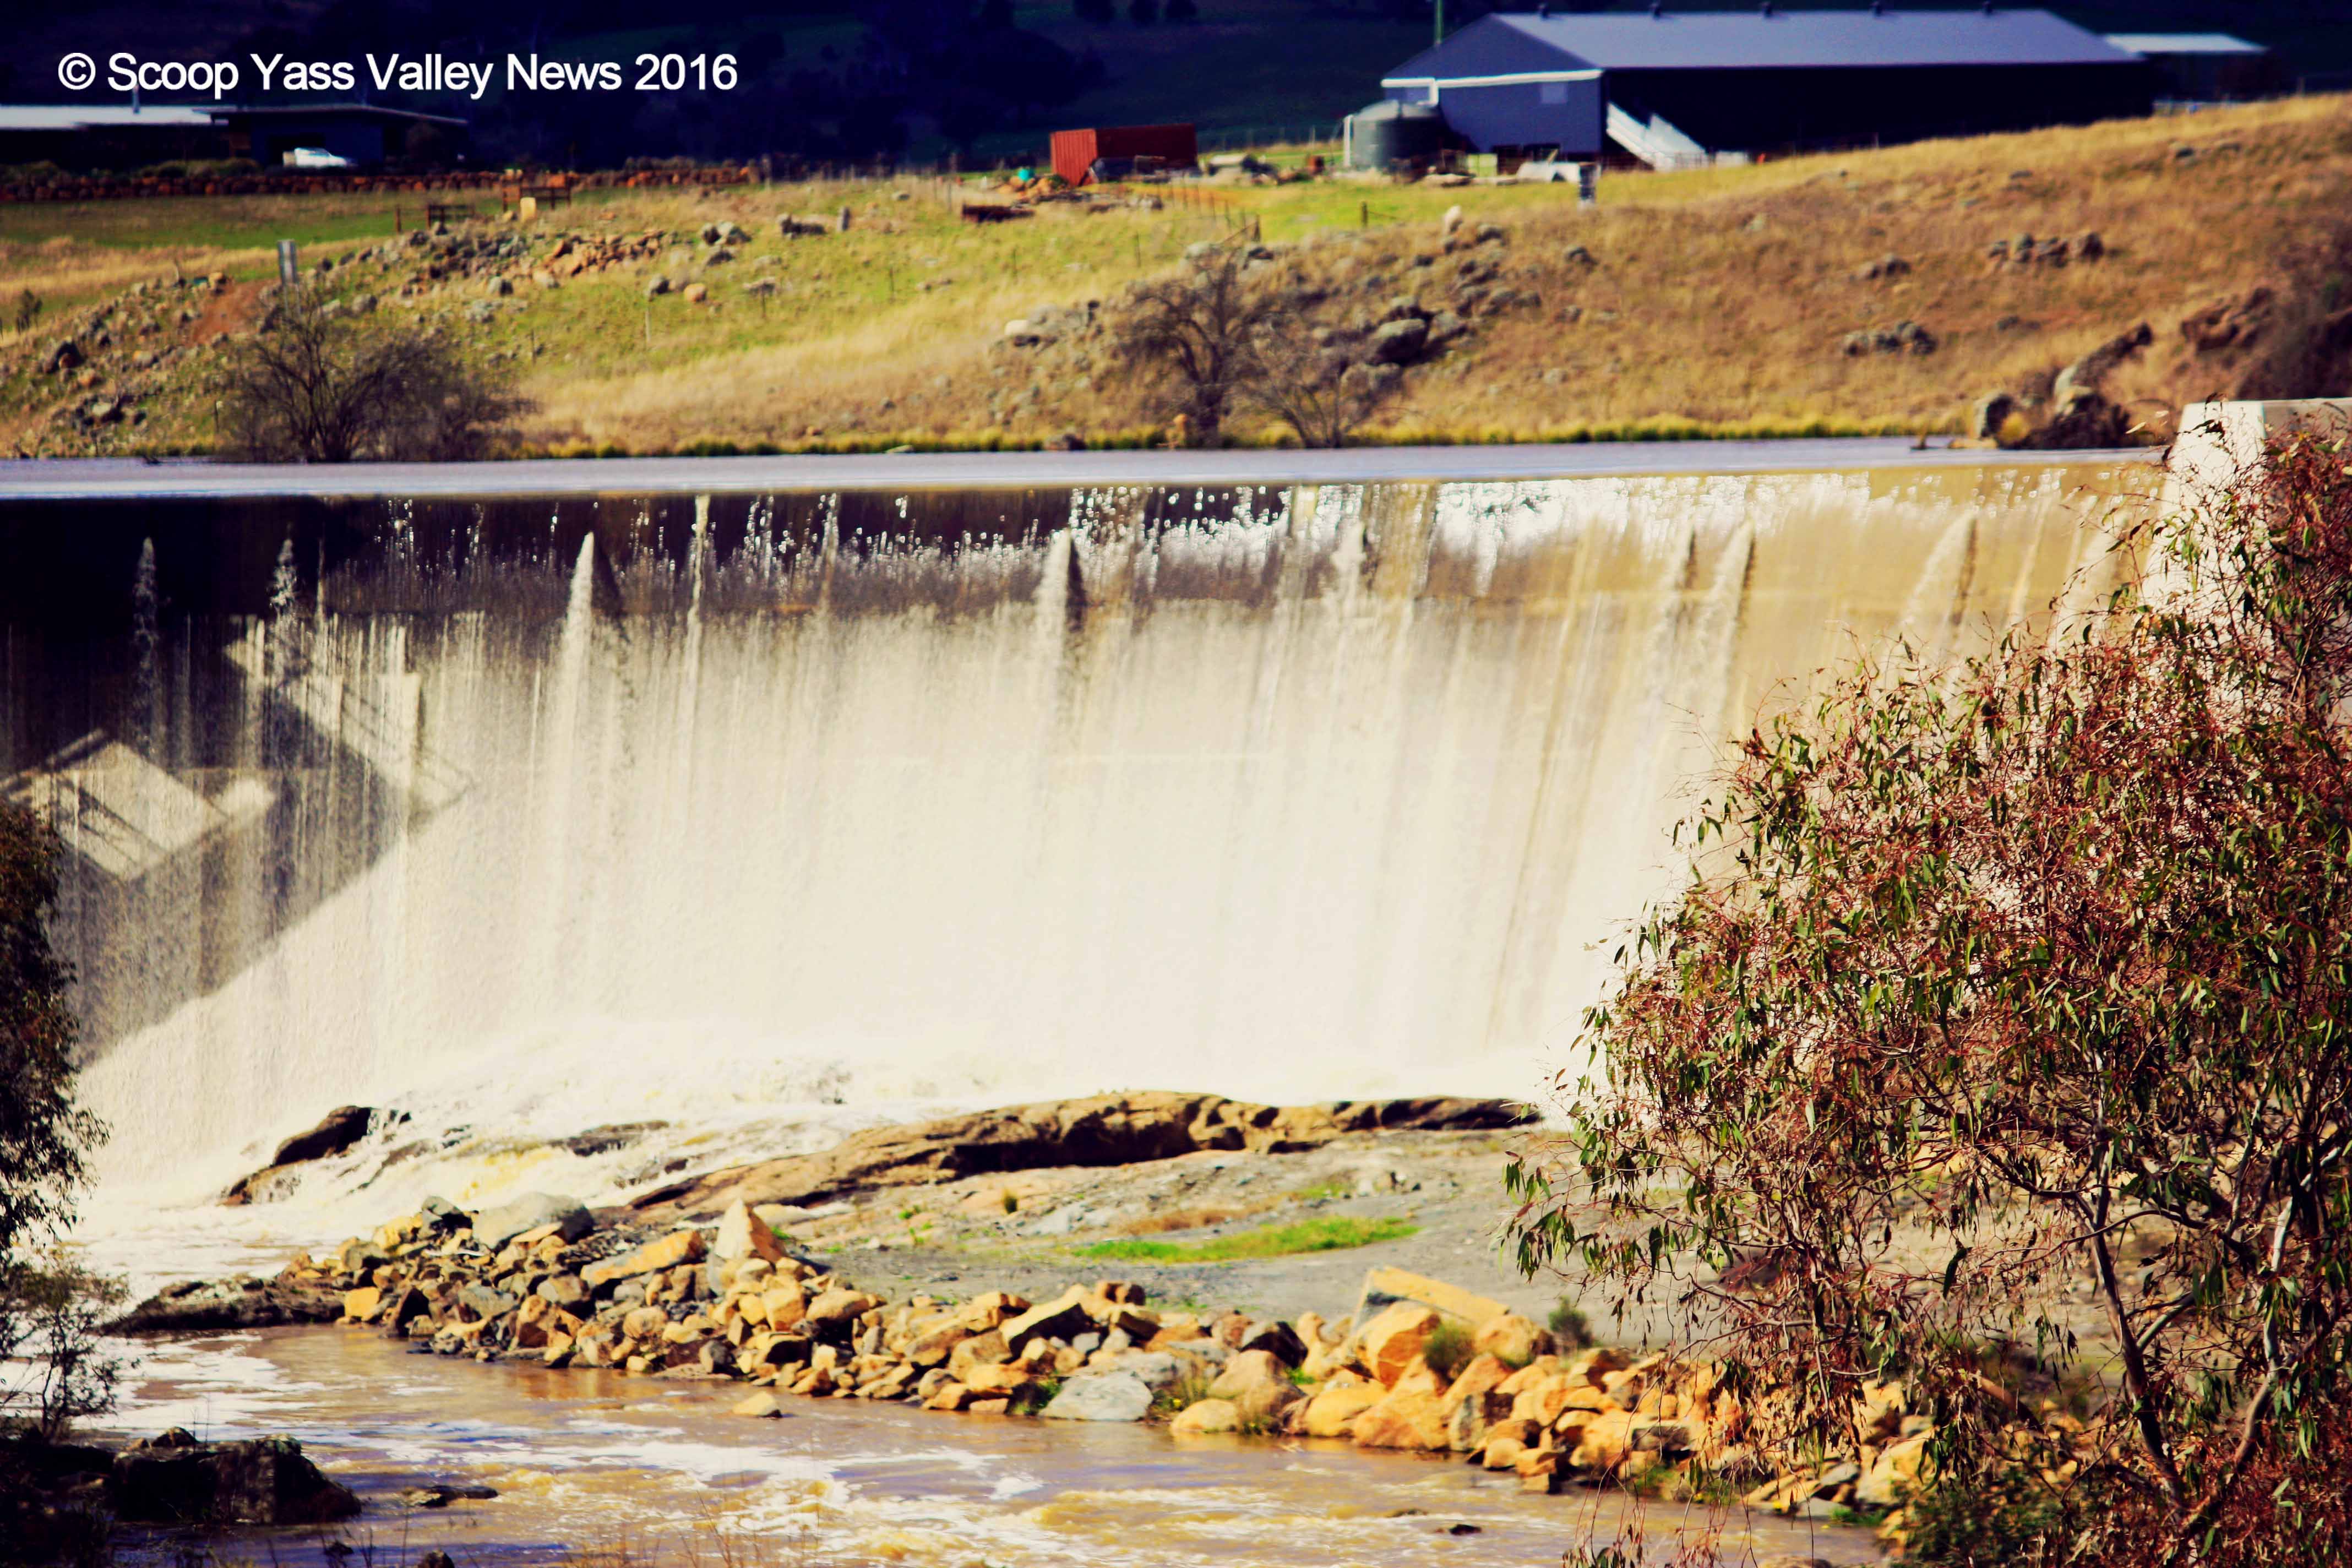 yass dam wall 2015 flood